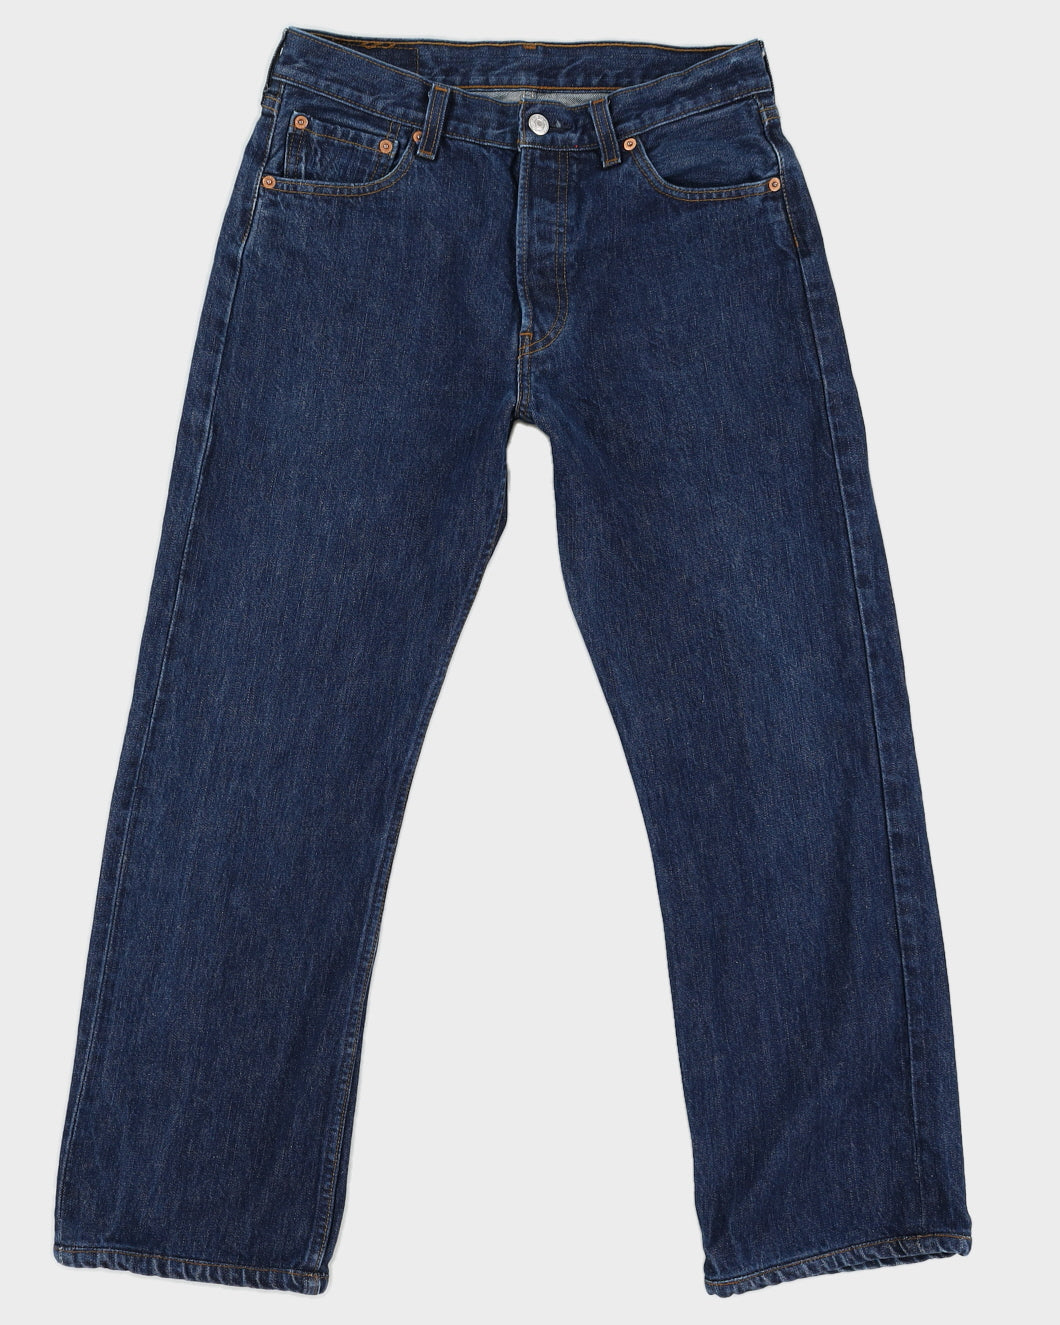 Vintage 90s Levi's Dark Wash 501 Jeans - W30 L27